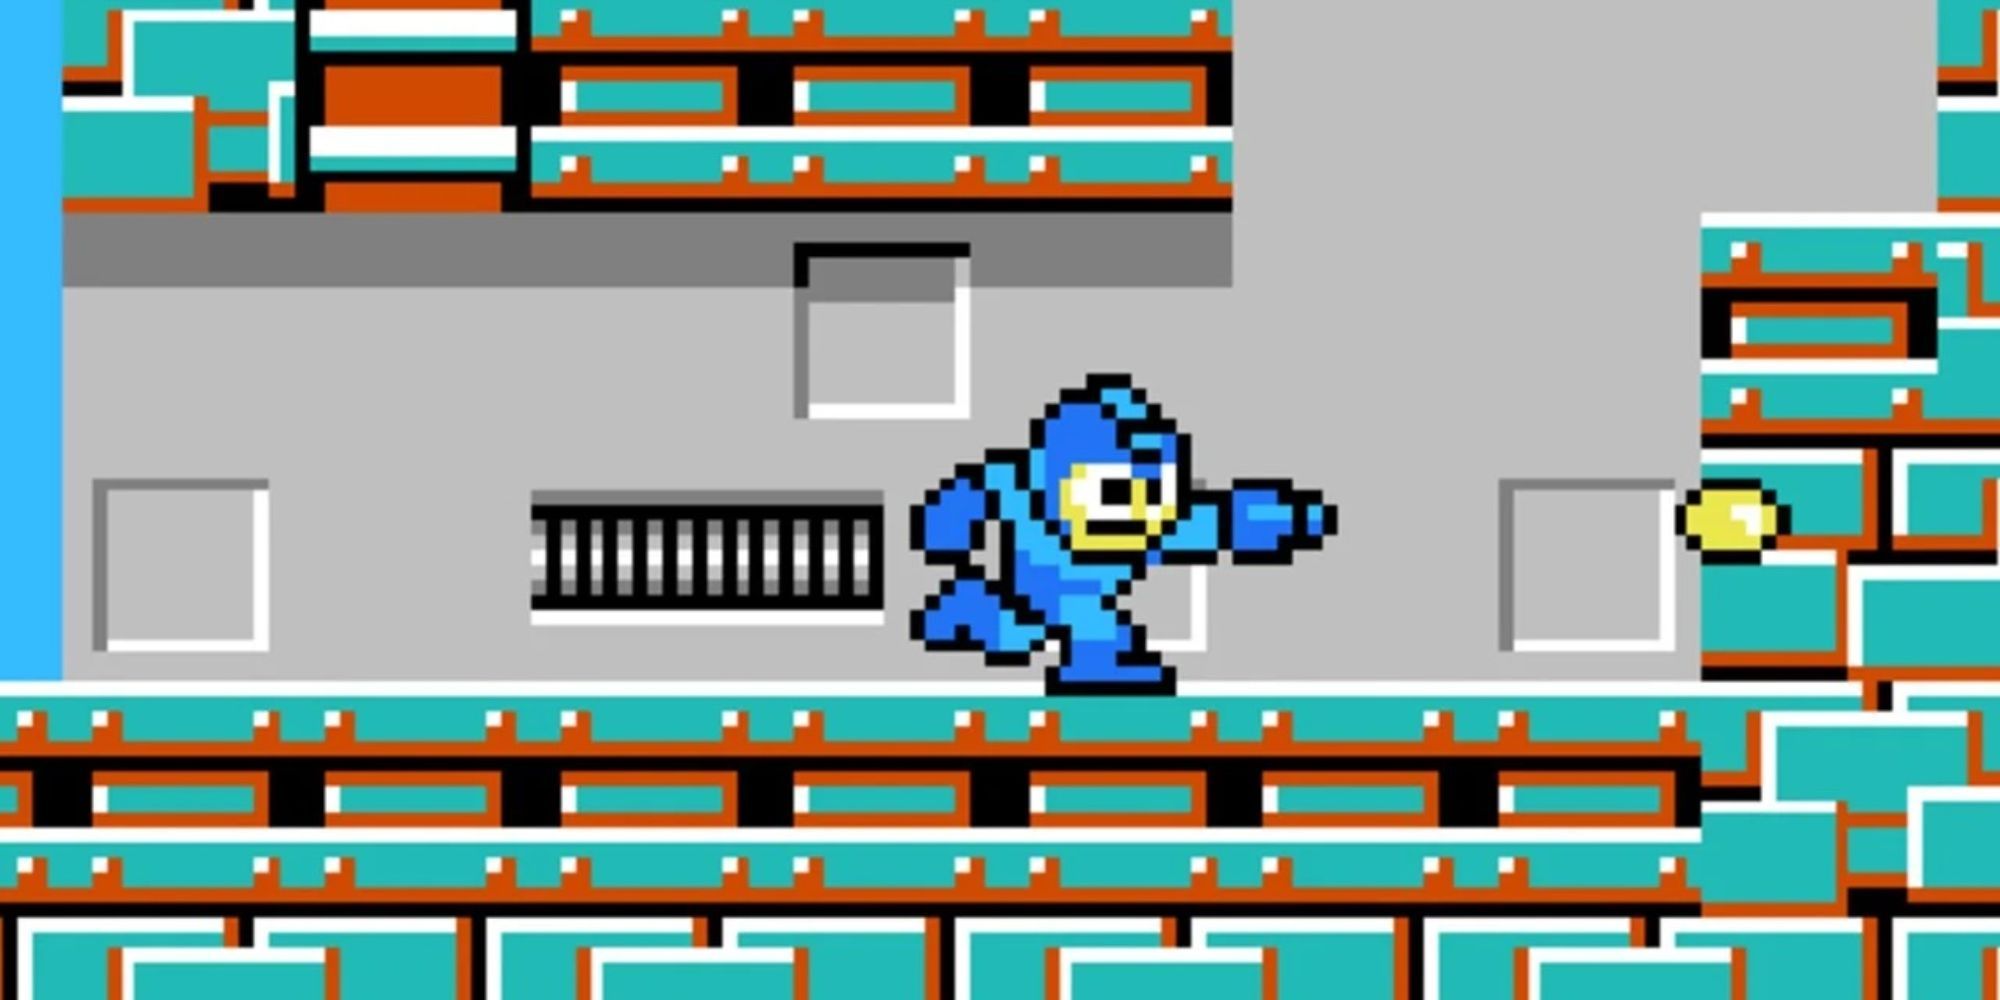 capcom NES sidescroller Mega Man strzela z broni